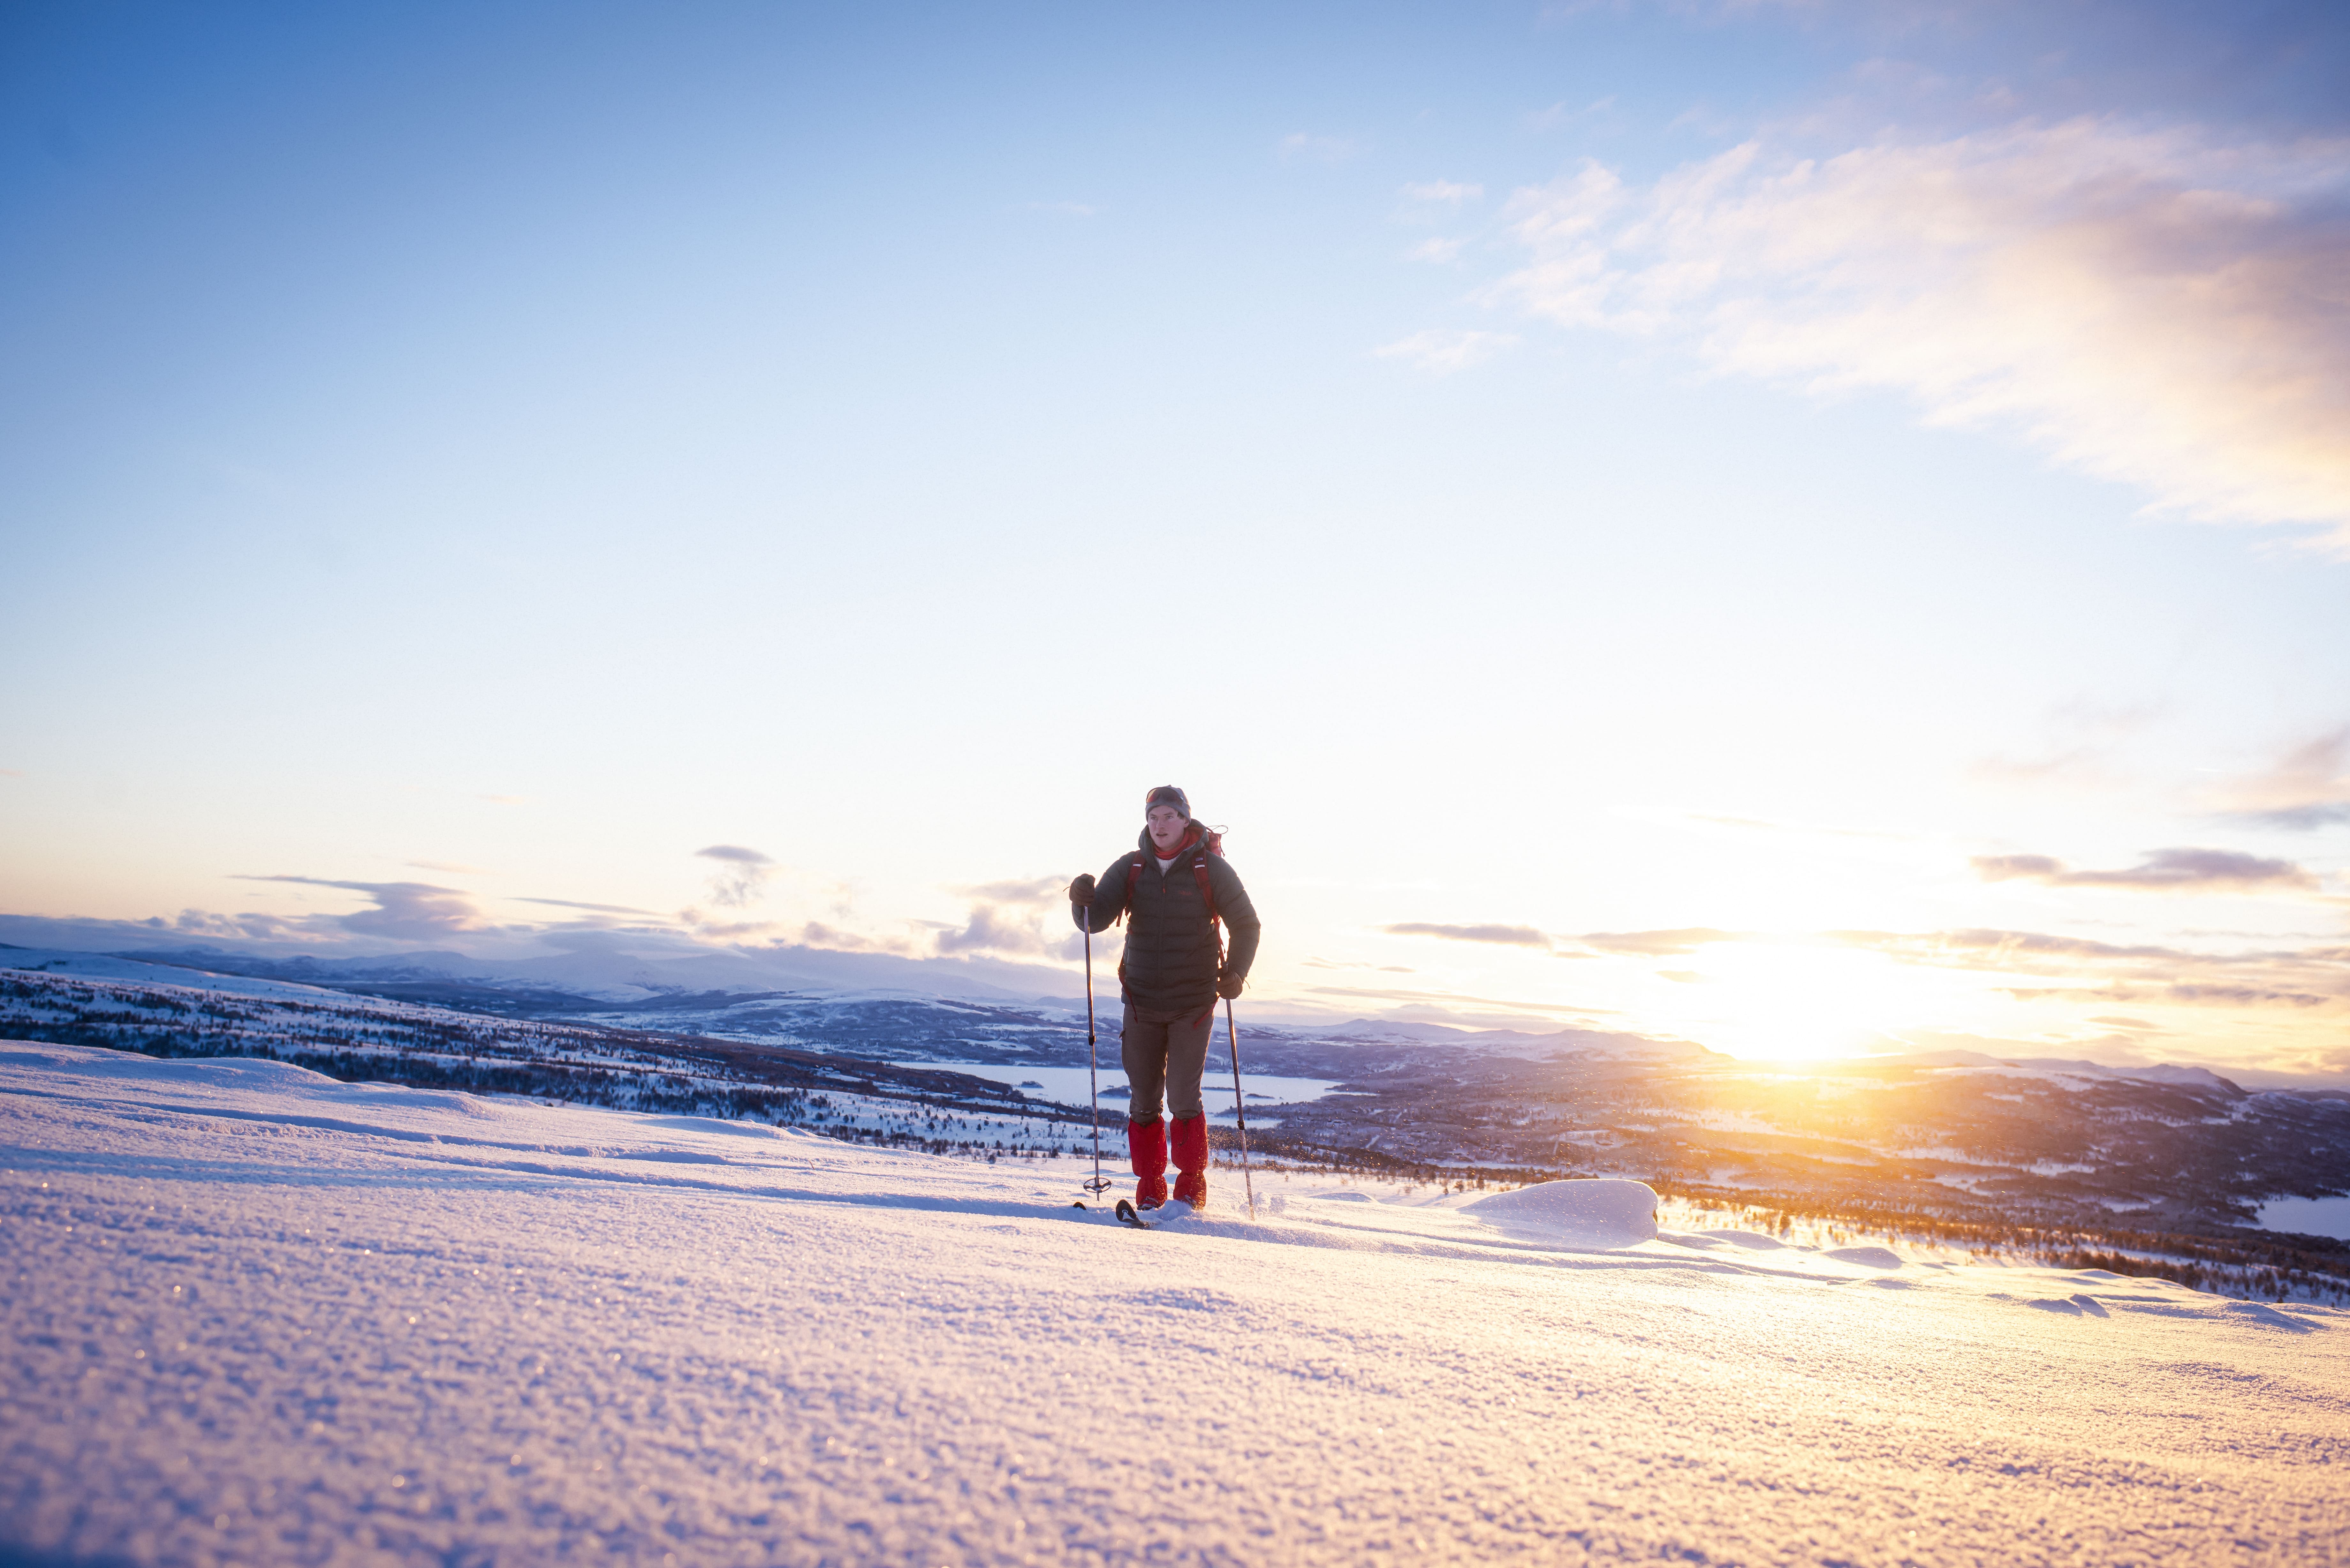 Skiing-randonee-winter-activity-snow-sunrise-hiking